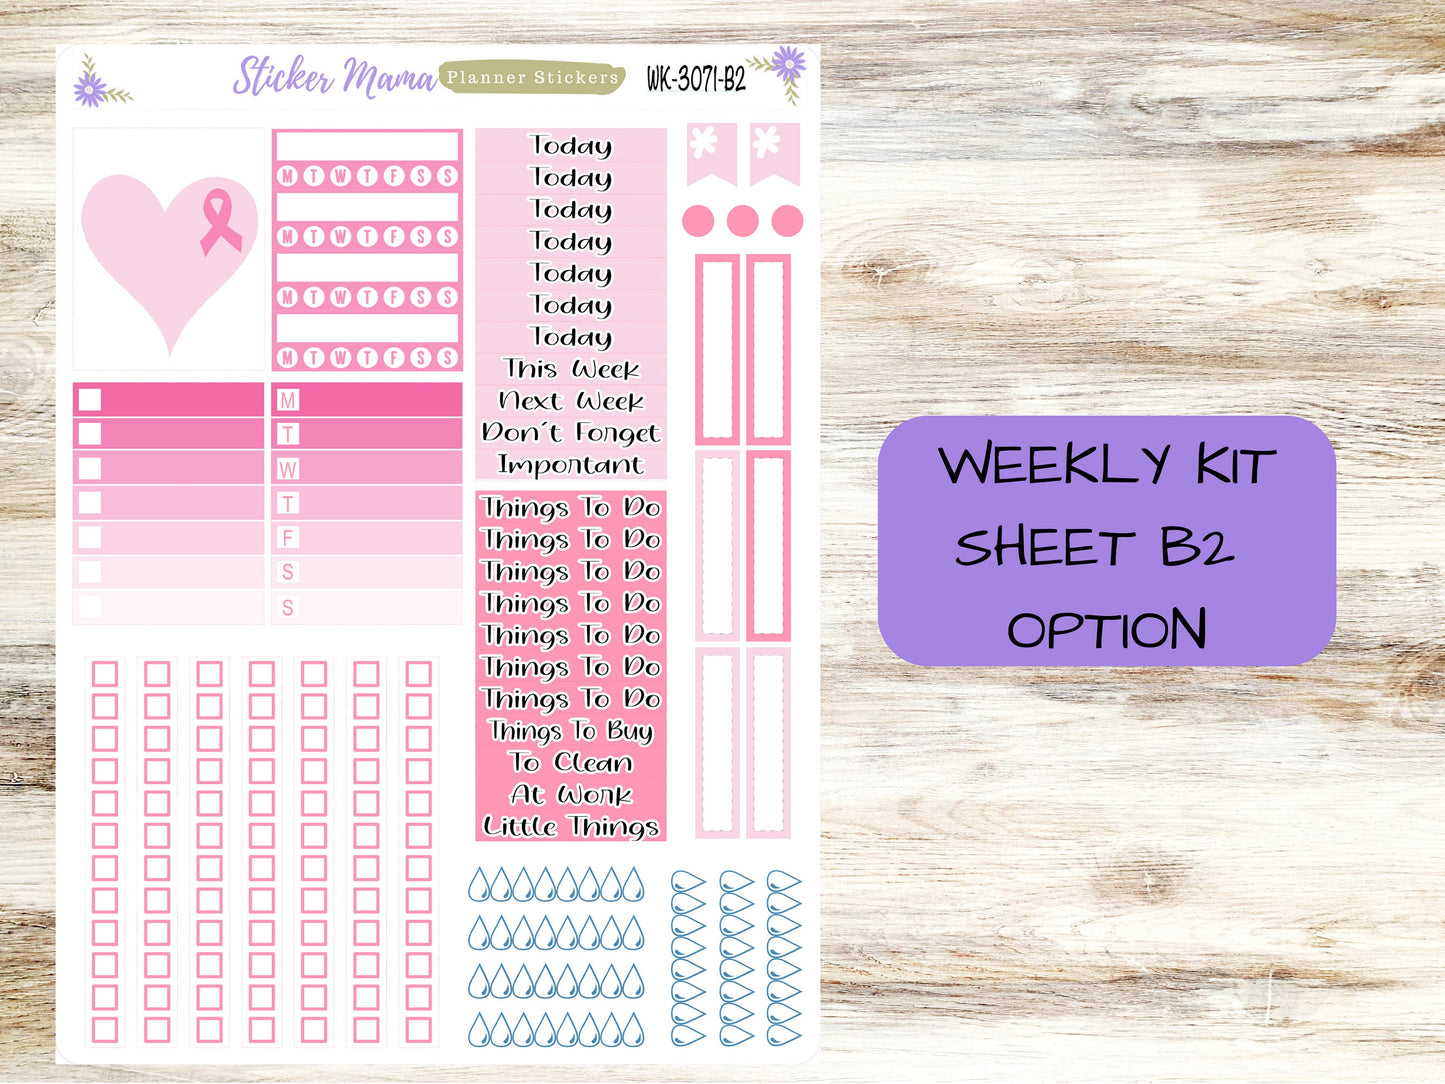 WEEKLY KIT 3071 - October Breast Cancer || Weekly Planner Kit || Erin Condren || Hourly Planner Kit || Vertical Planner Kit